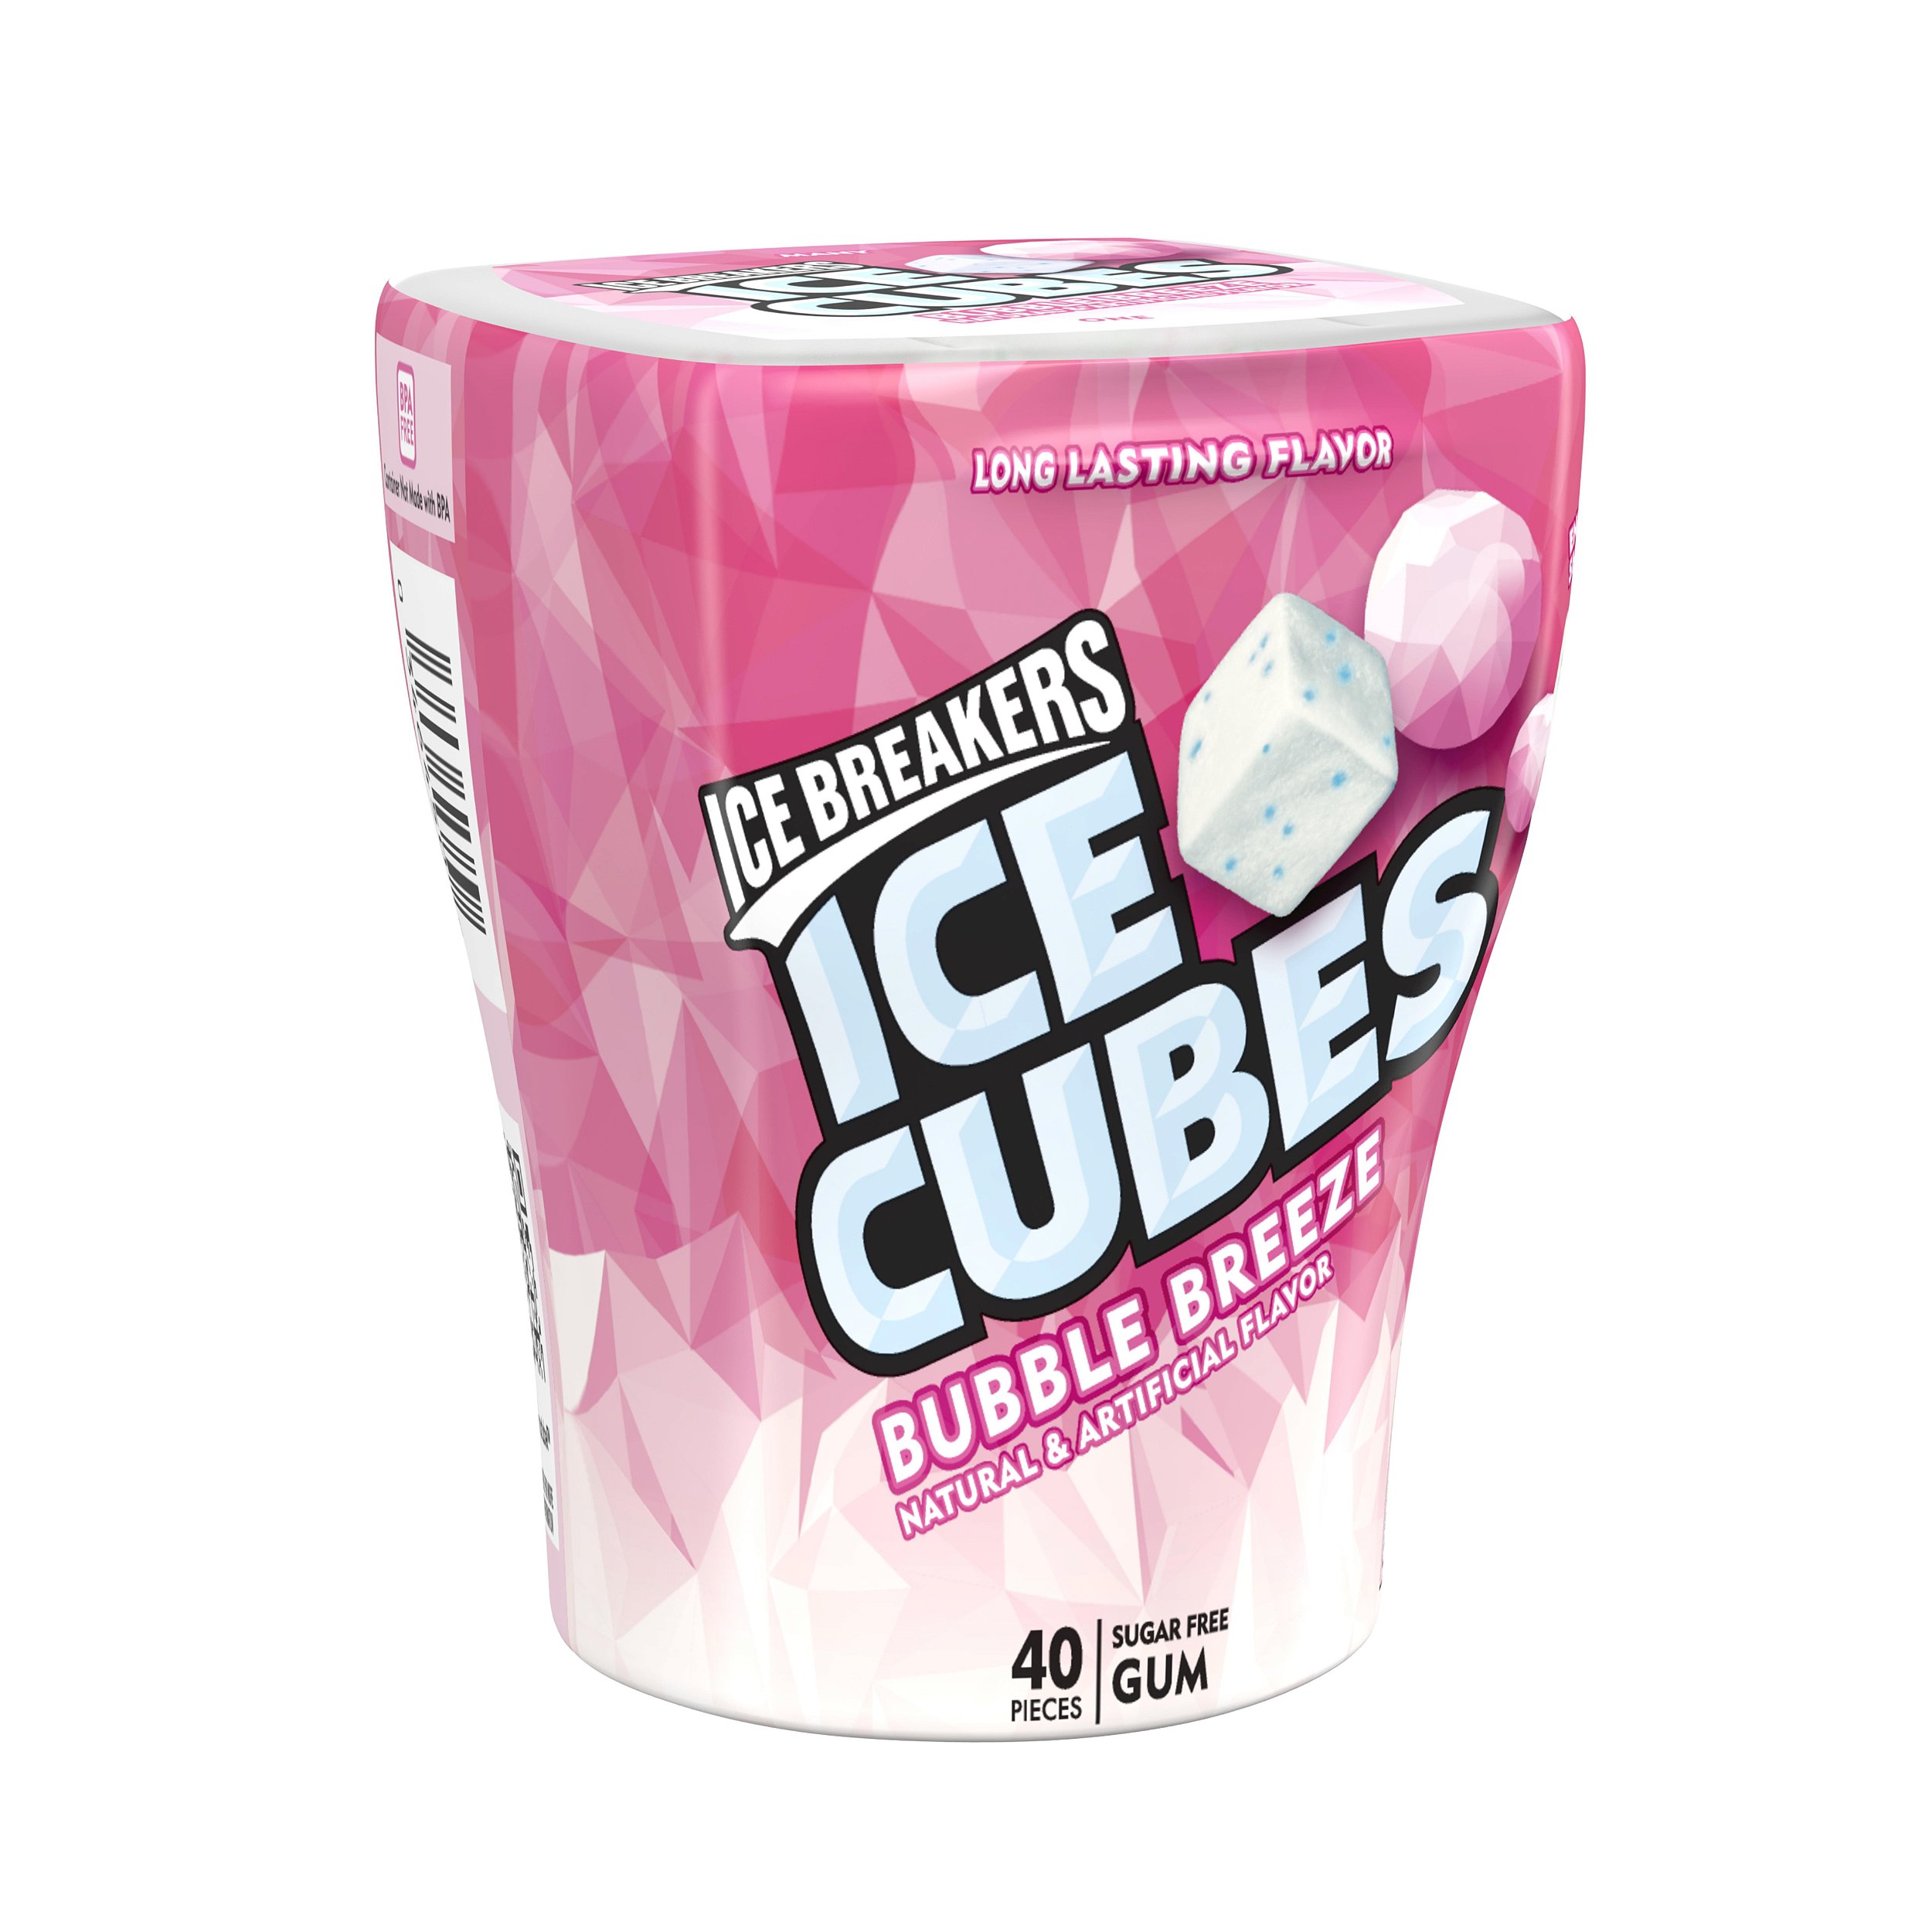 Ice Breakers, Ice Cubes Bubble Gum, Bubble Breeze - Consumos da Martina